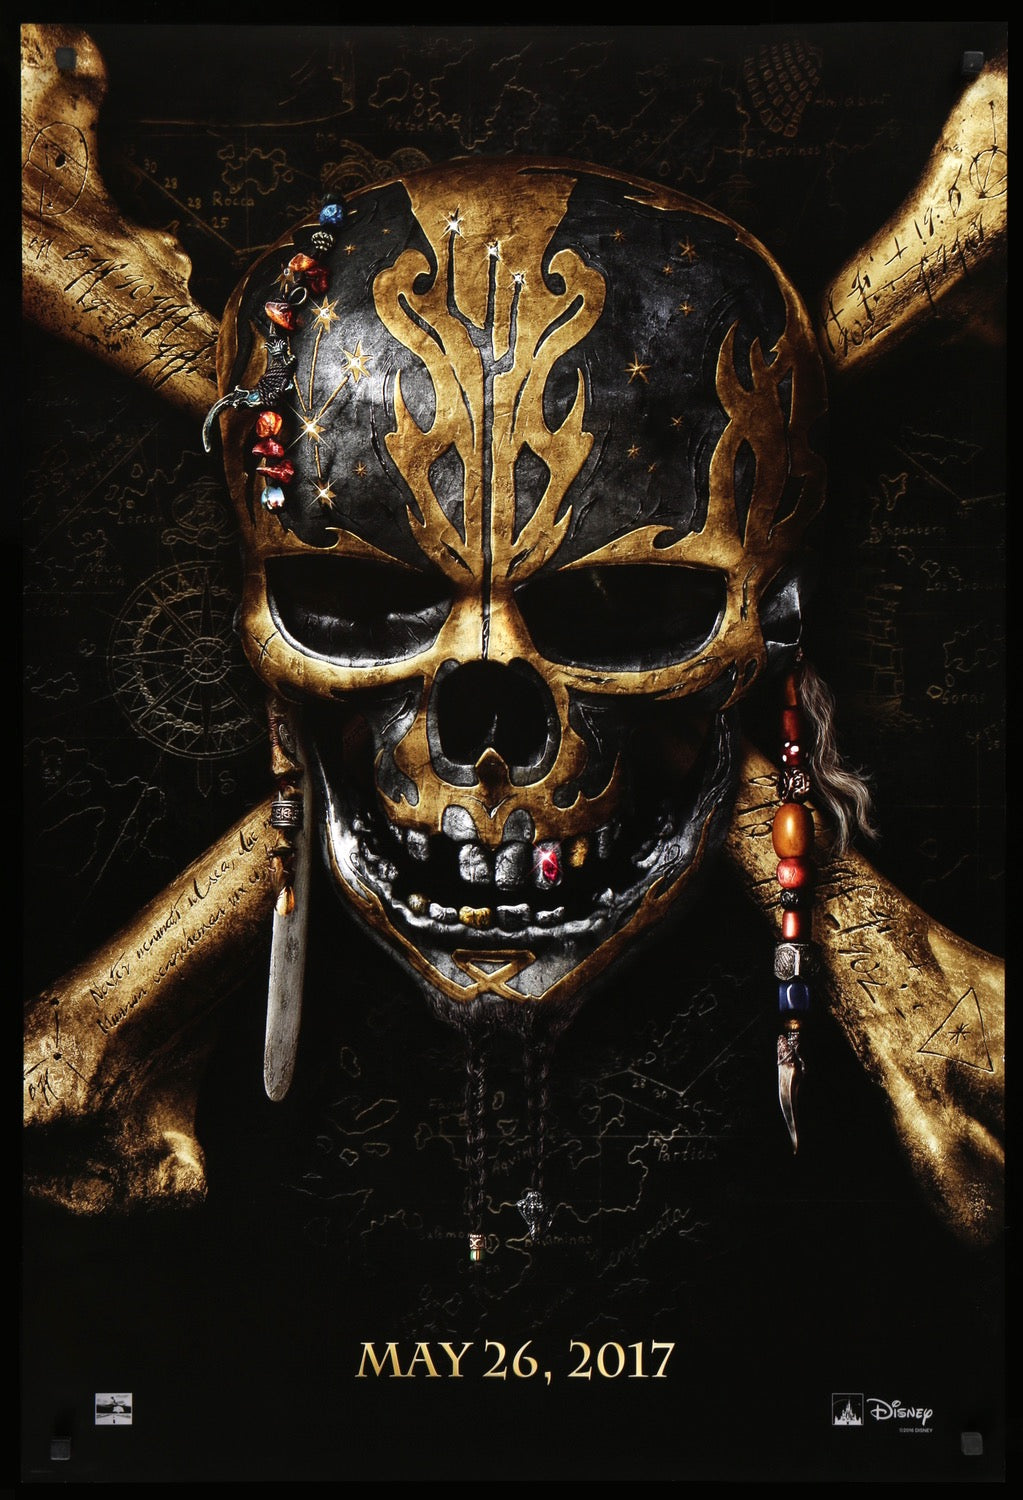 Pirates of the Caribbean: Dead Men Tell No Tales (2017) original movie poster for sale at Original Film Art